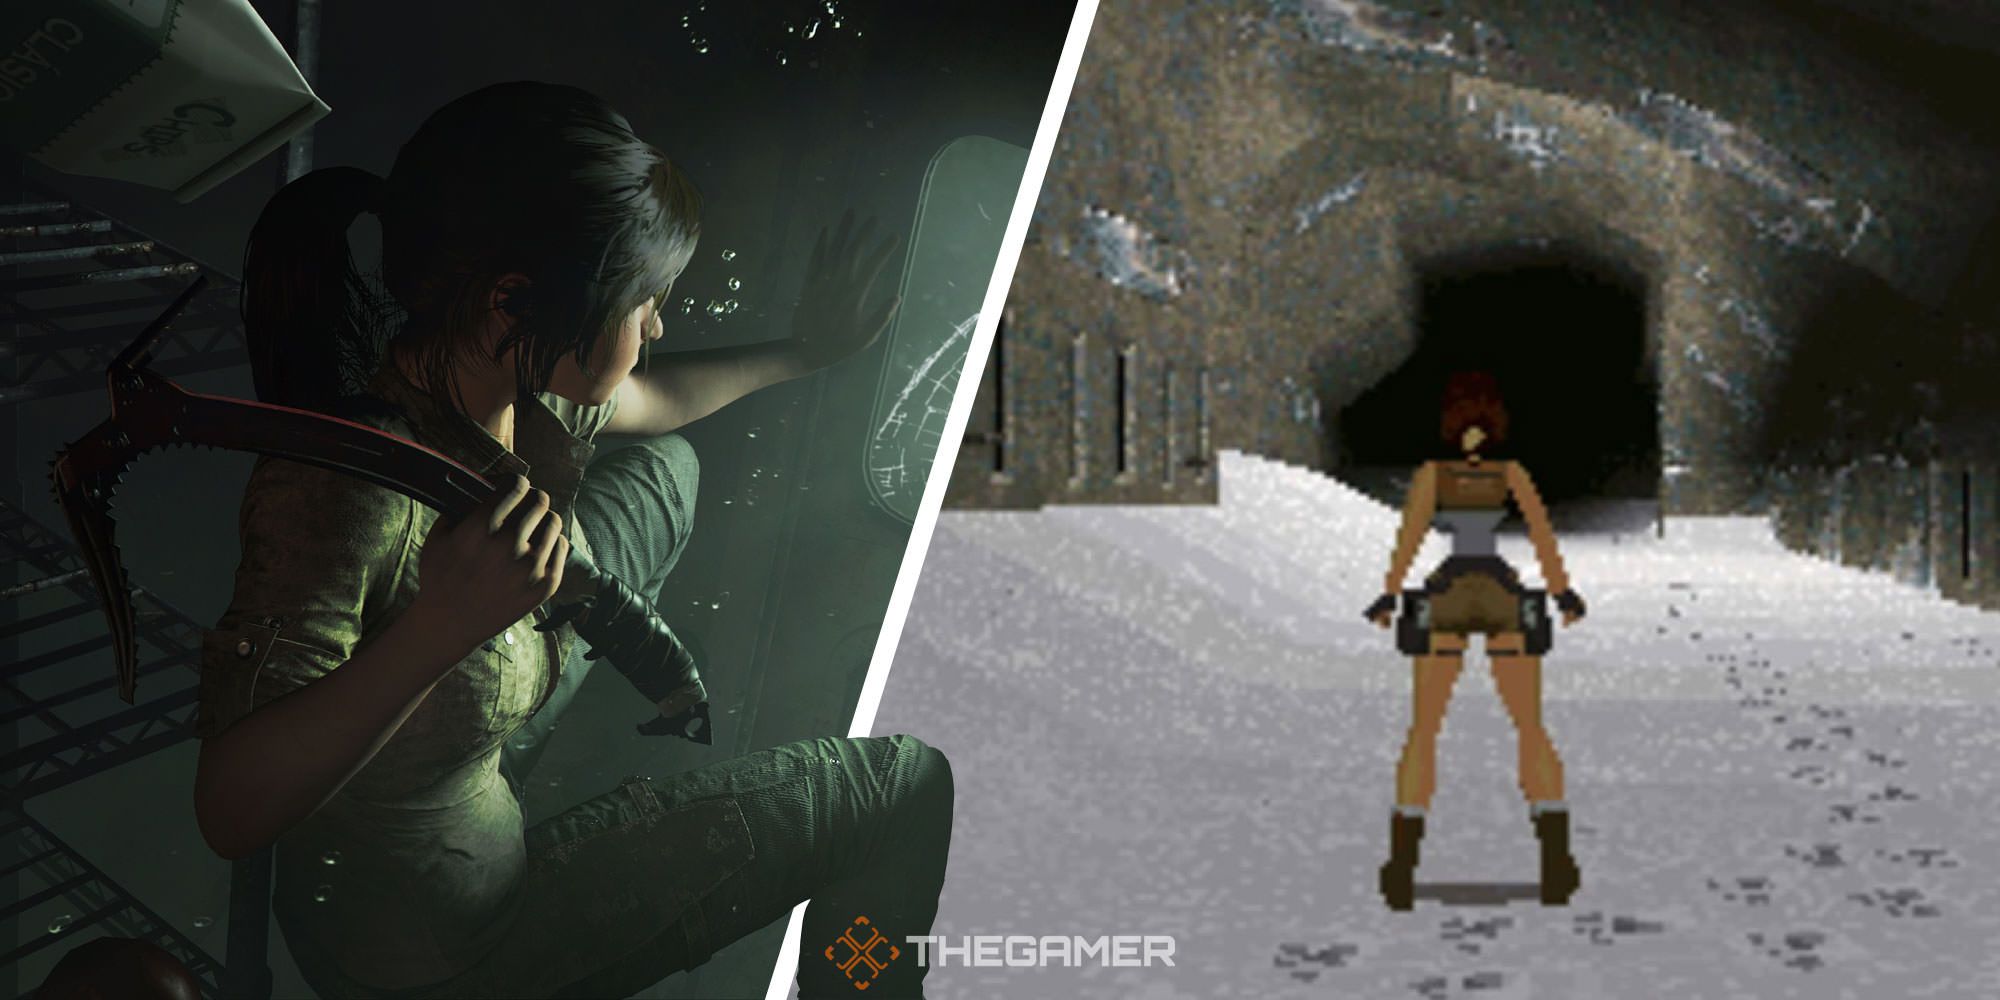 Split image of Lara Croft from 1996 to 2018